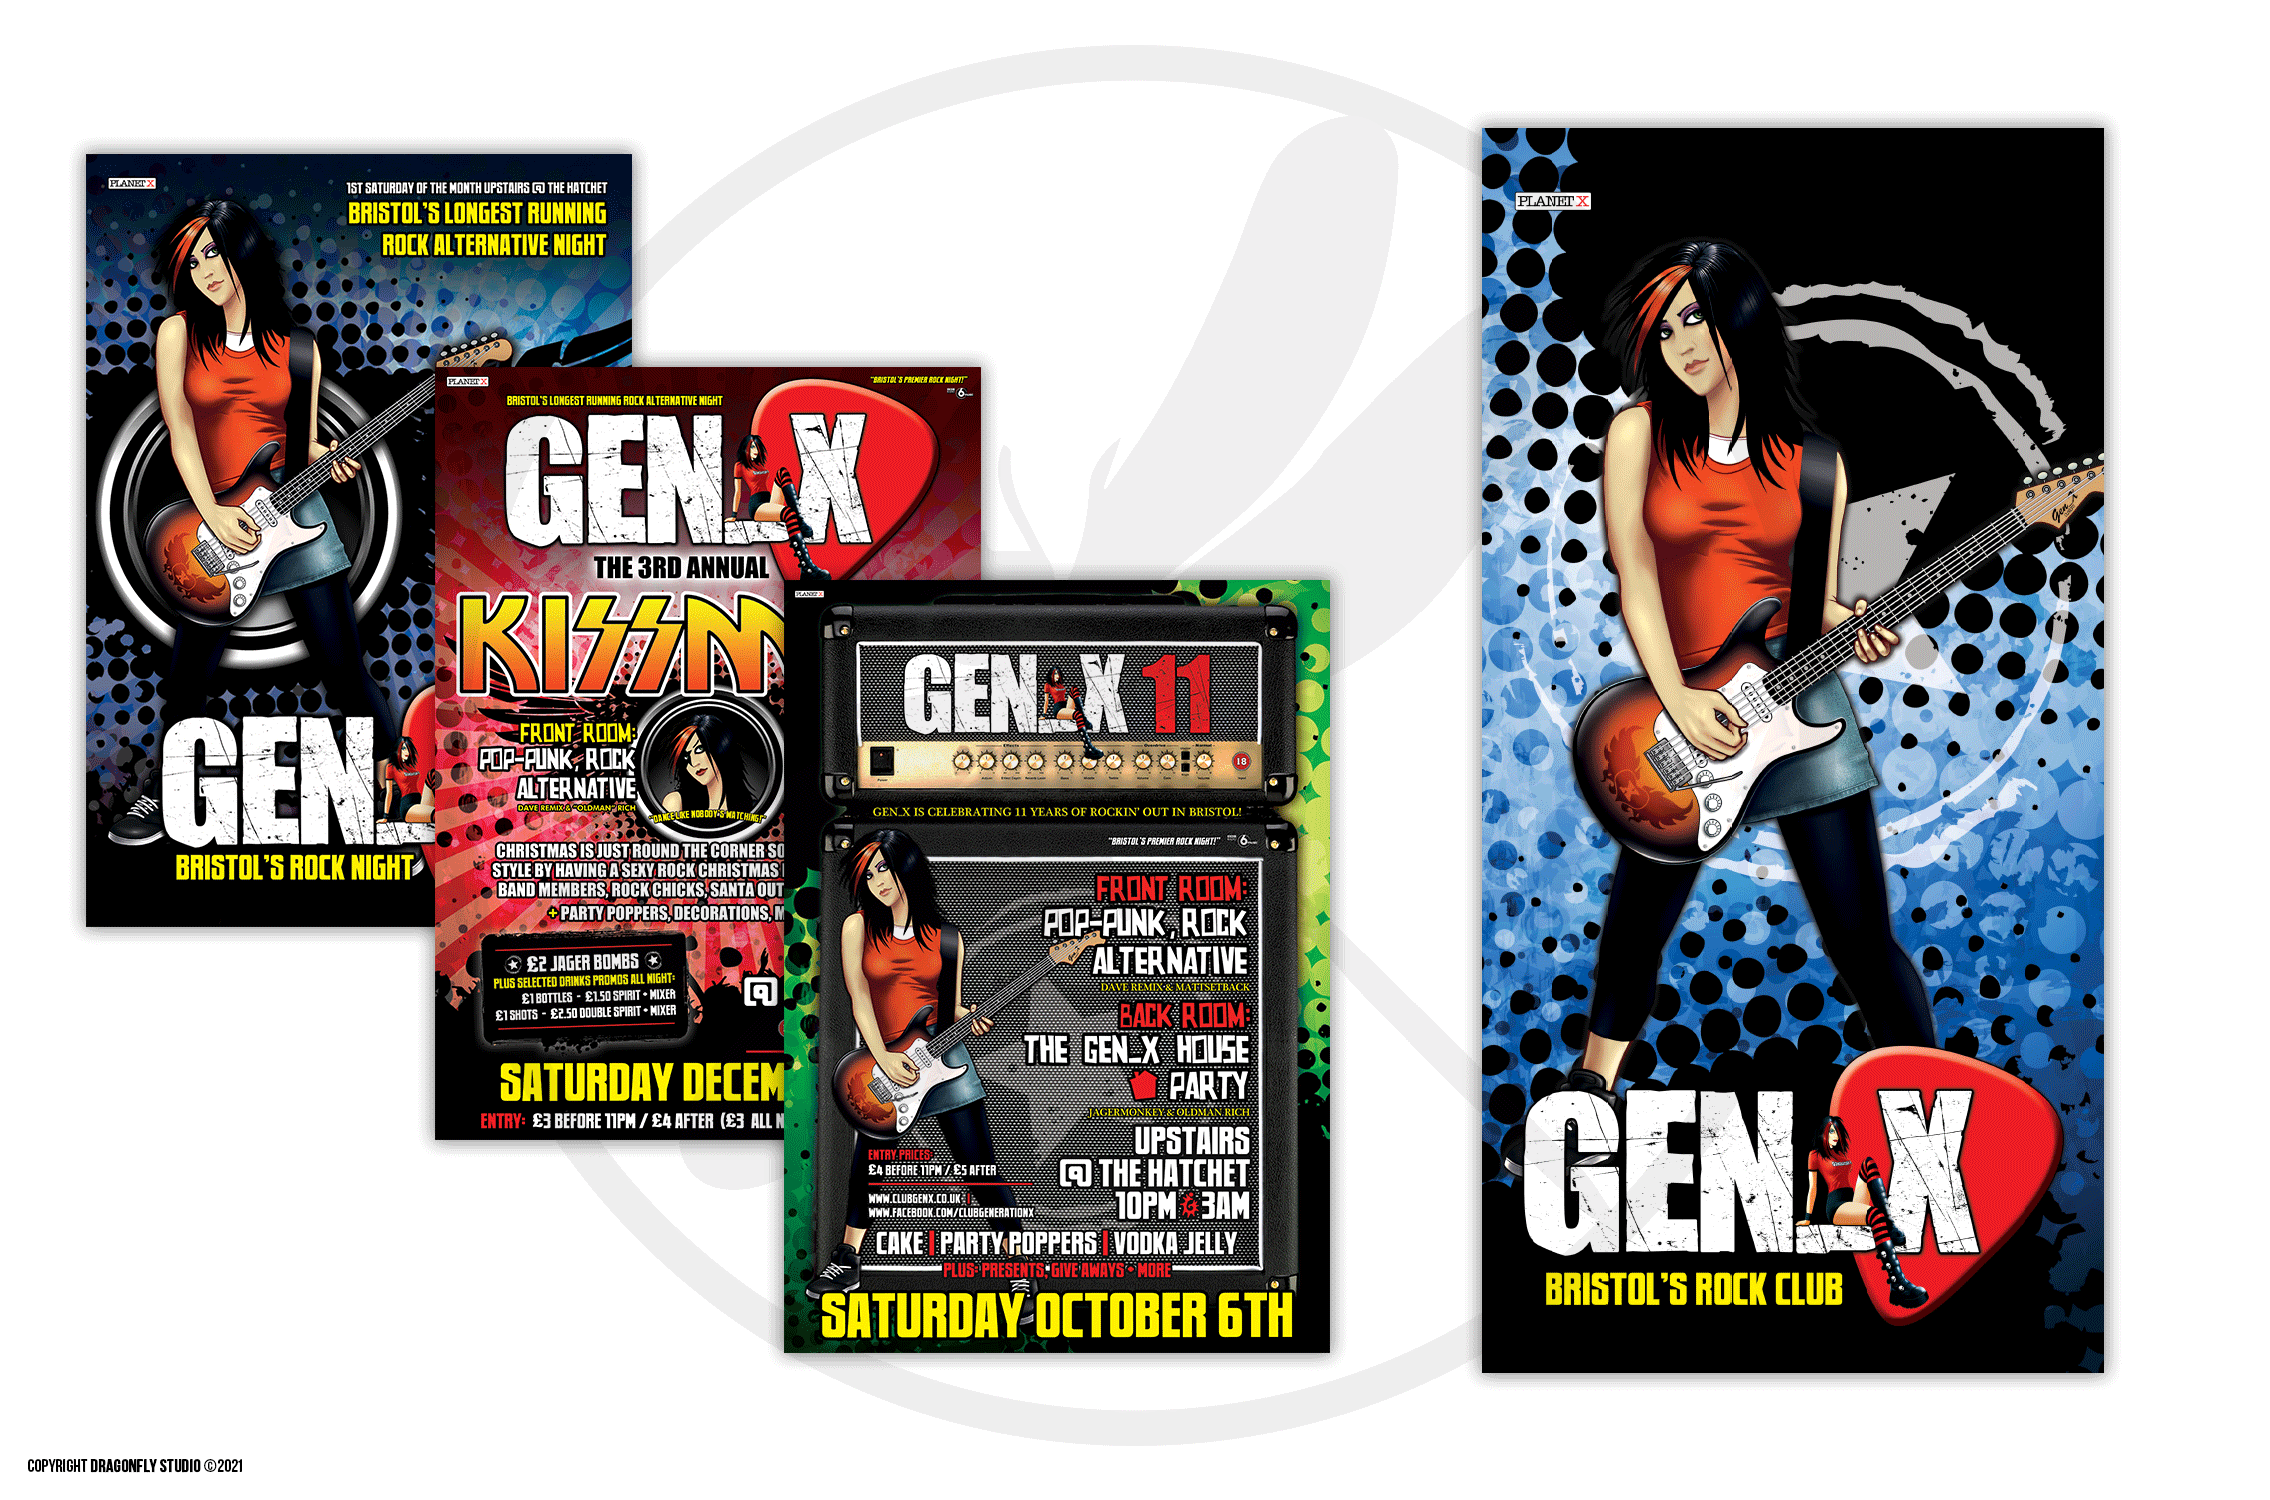 Gen_X Club Night - Branding & Promotional Material